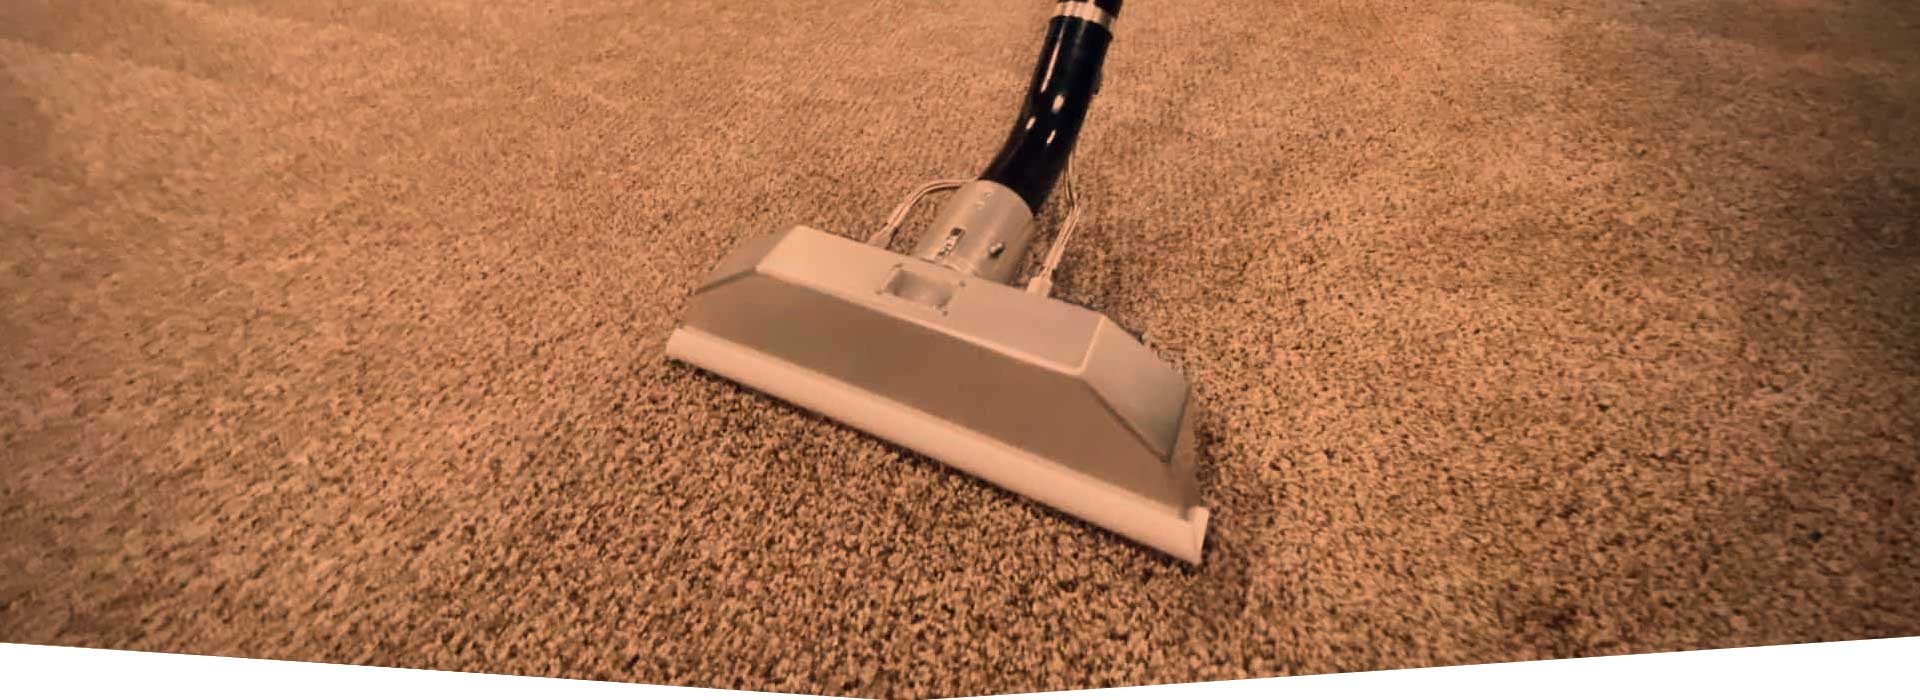 Carpet Cleaning Brompton